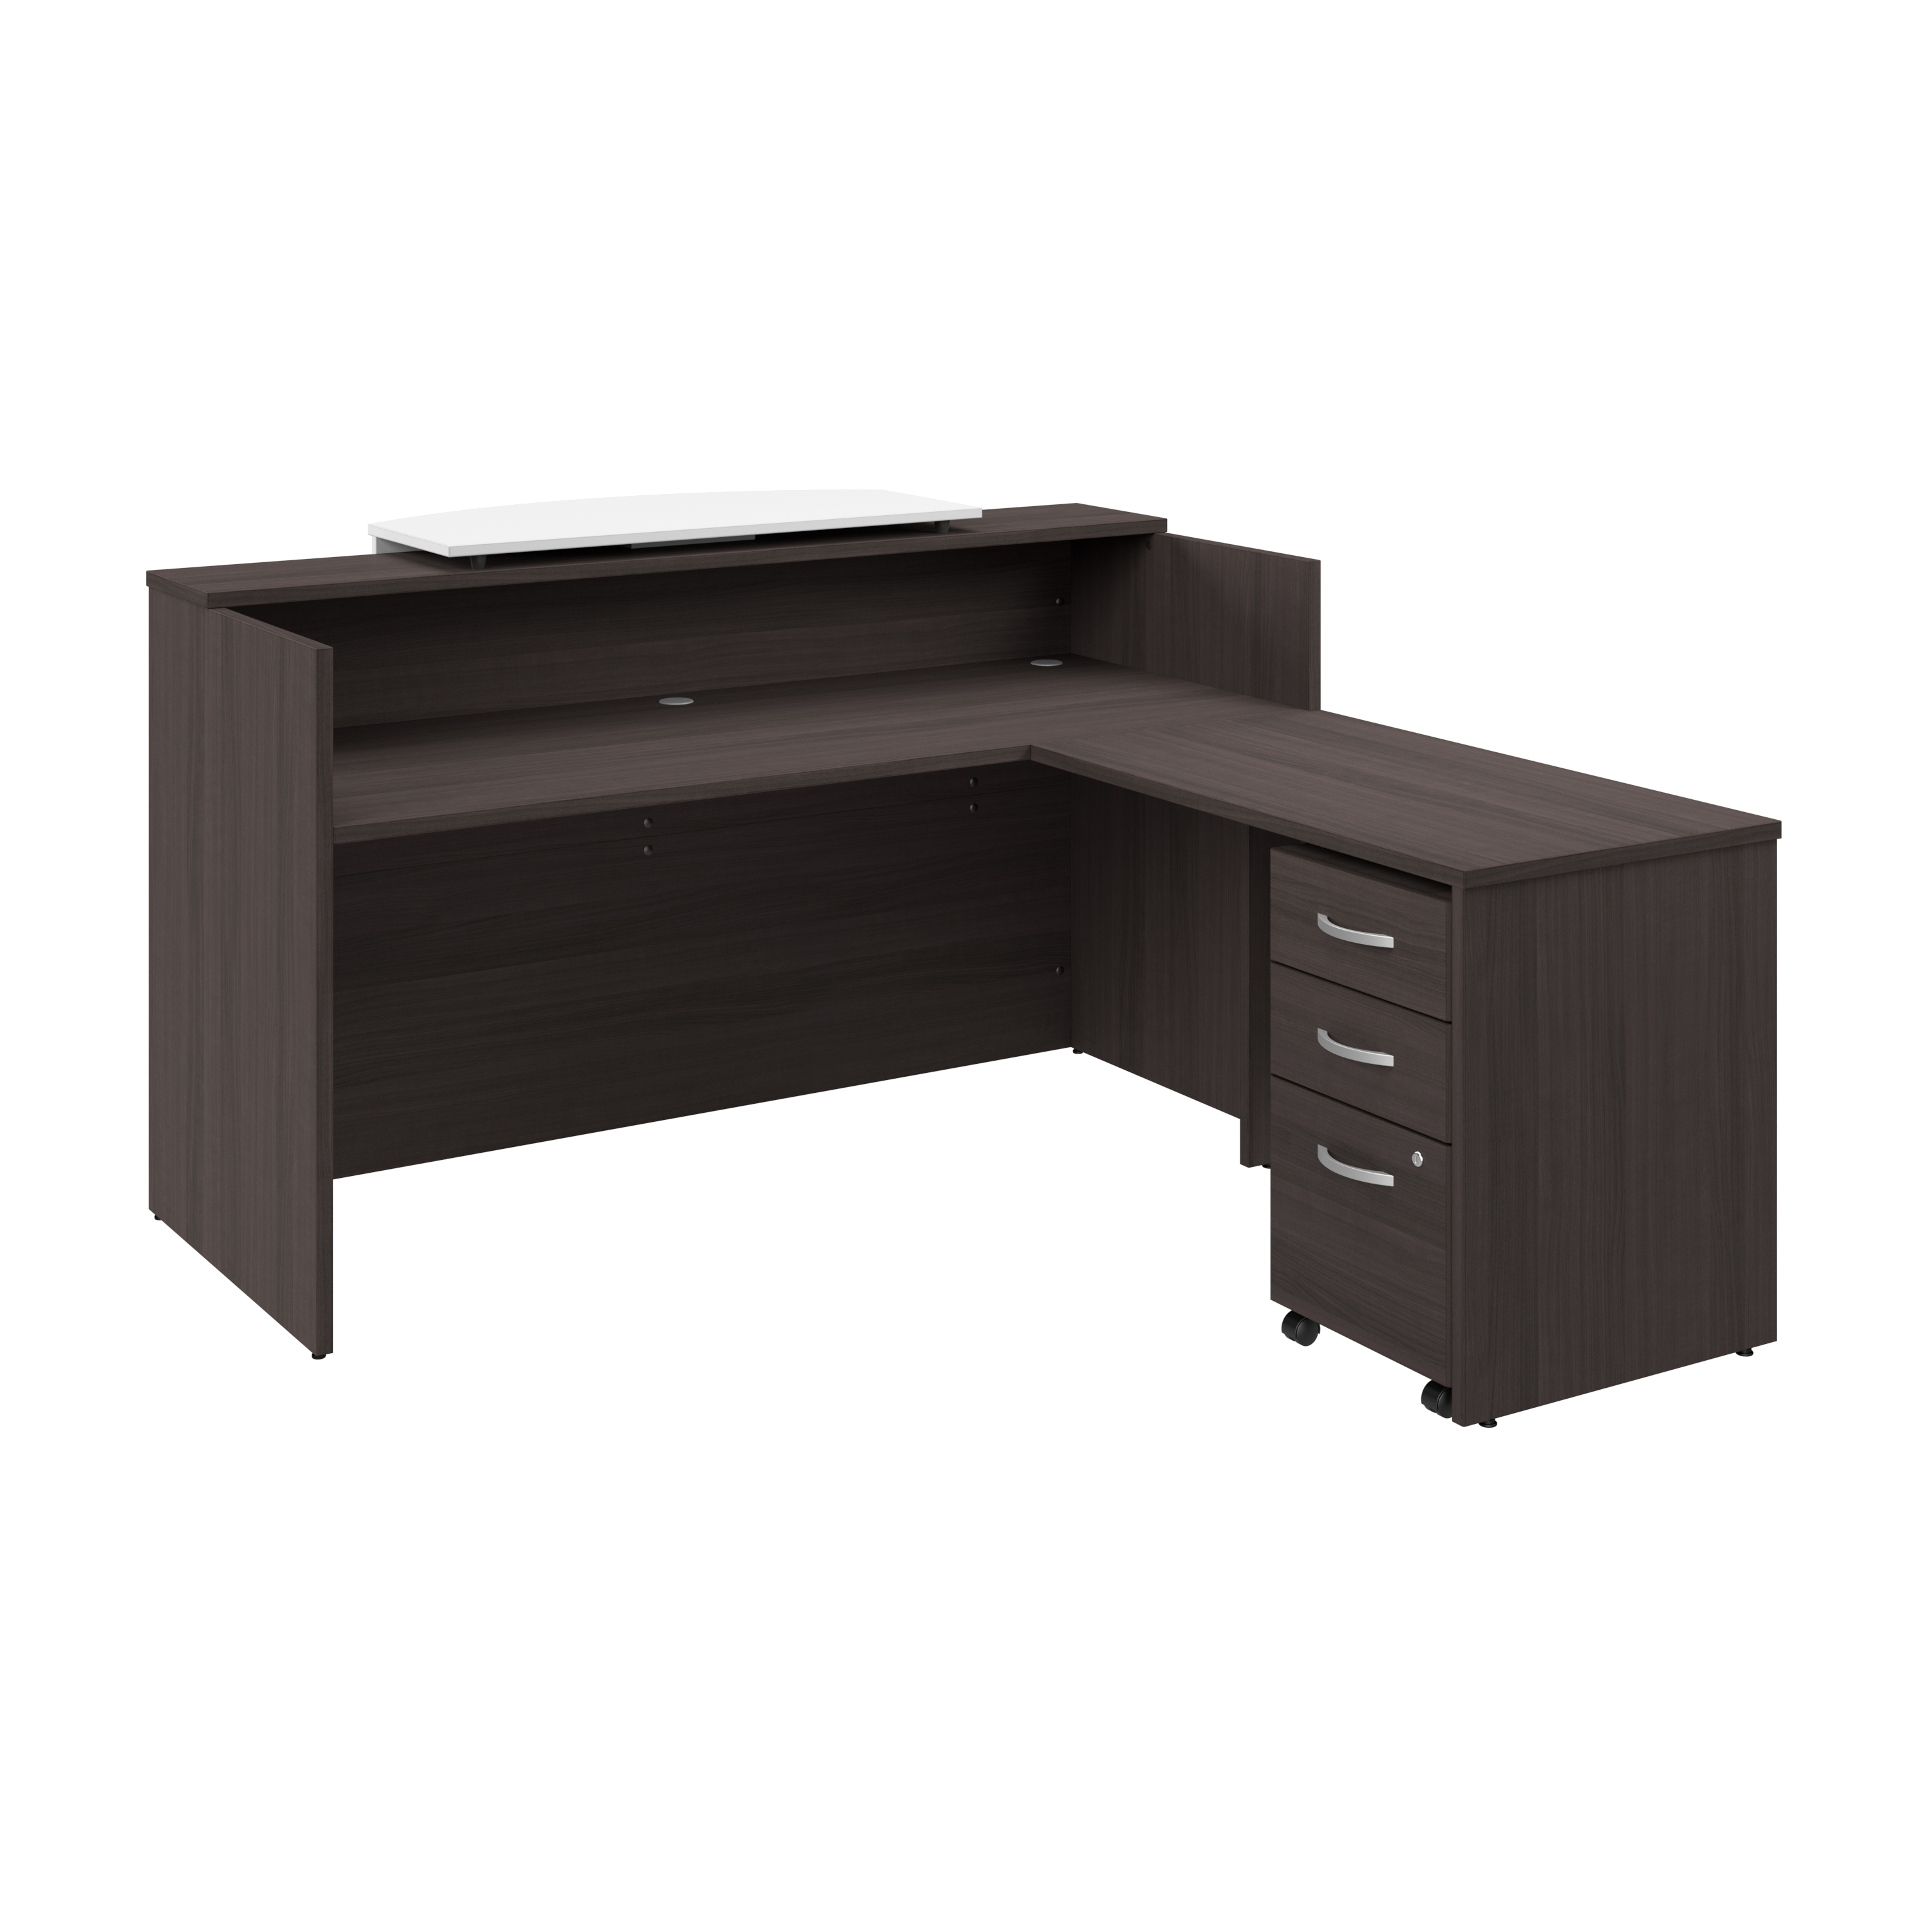 Shop Bush Business Furniture Arrive 72W x 72D L Shaped Reception Desk with Counter and Mobile File Cabinet 02 ARV010SG #color_storm gray